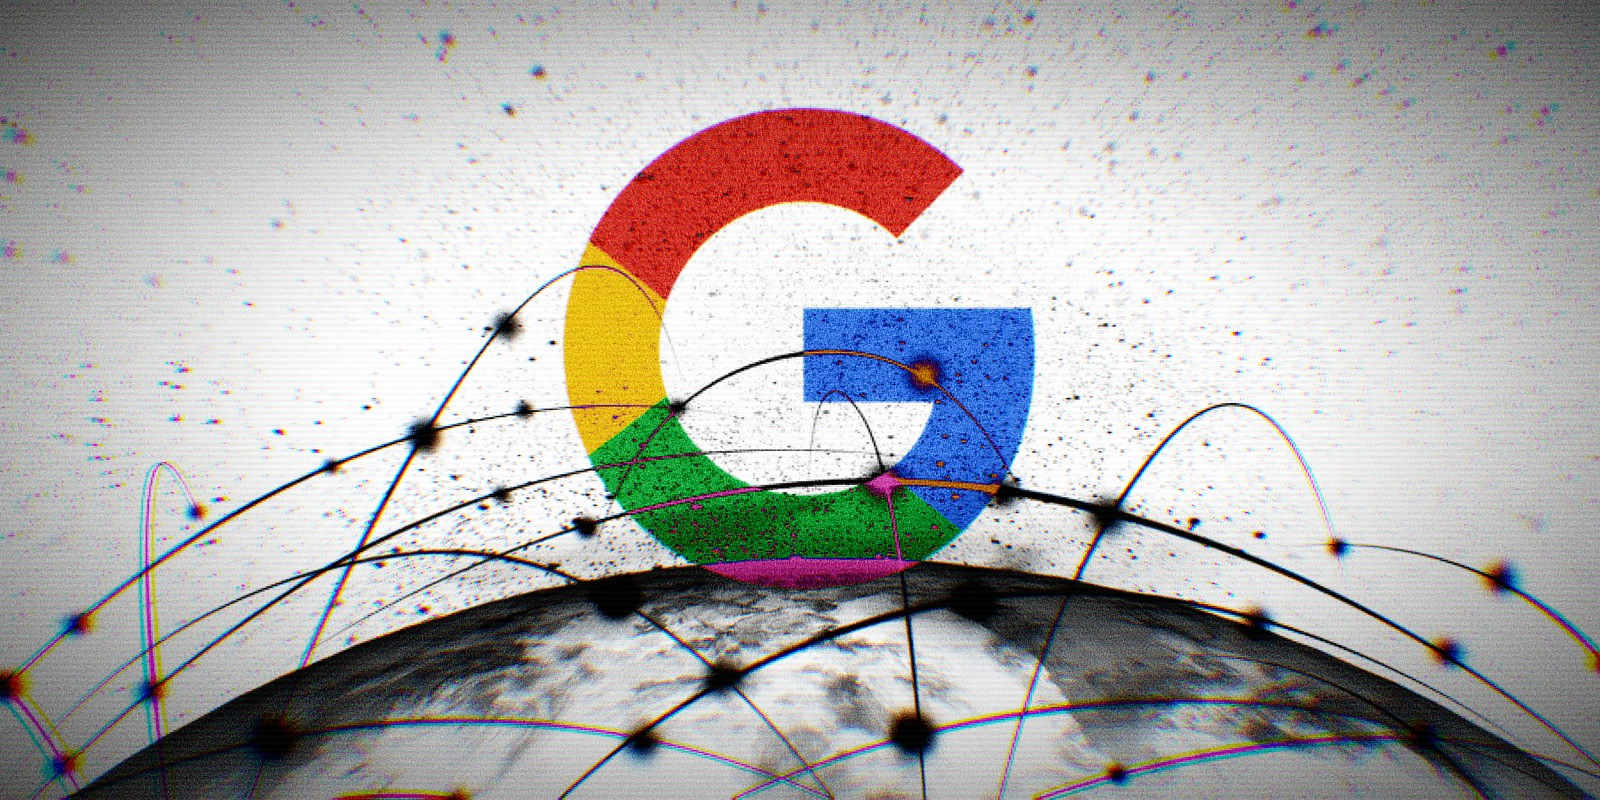 Google network